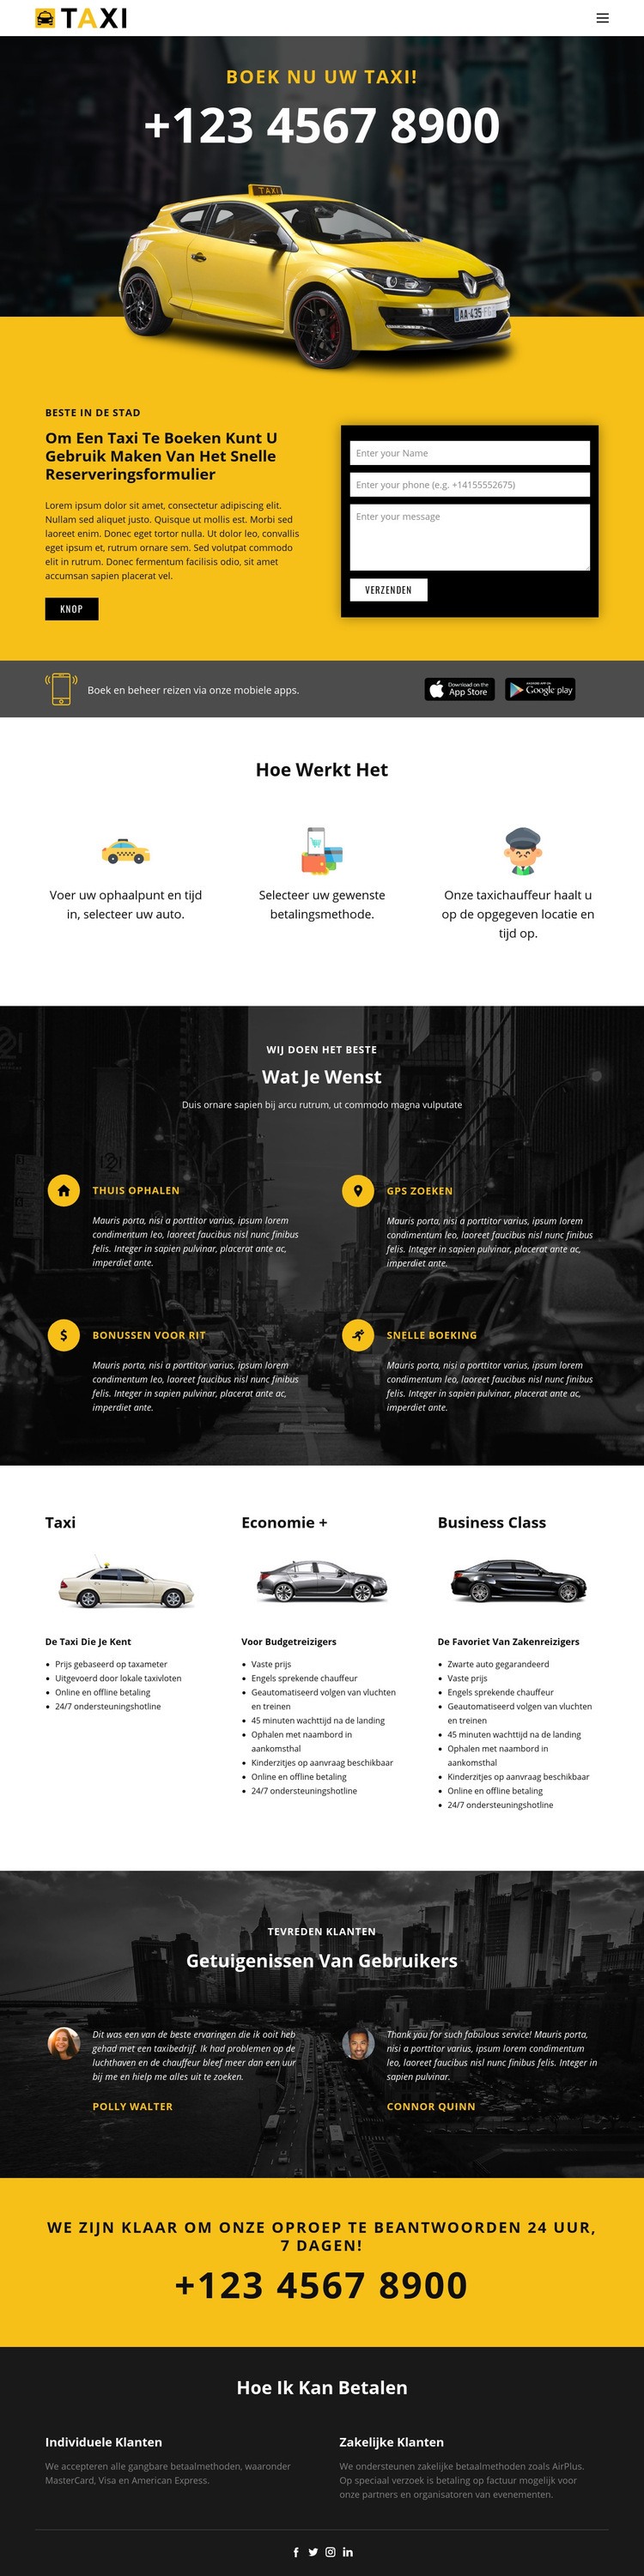 Snelste taxi's Website ontwerp